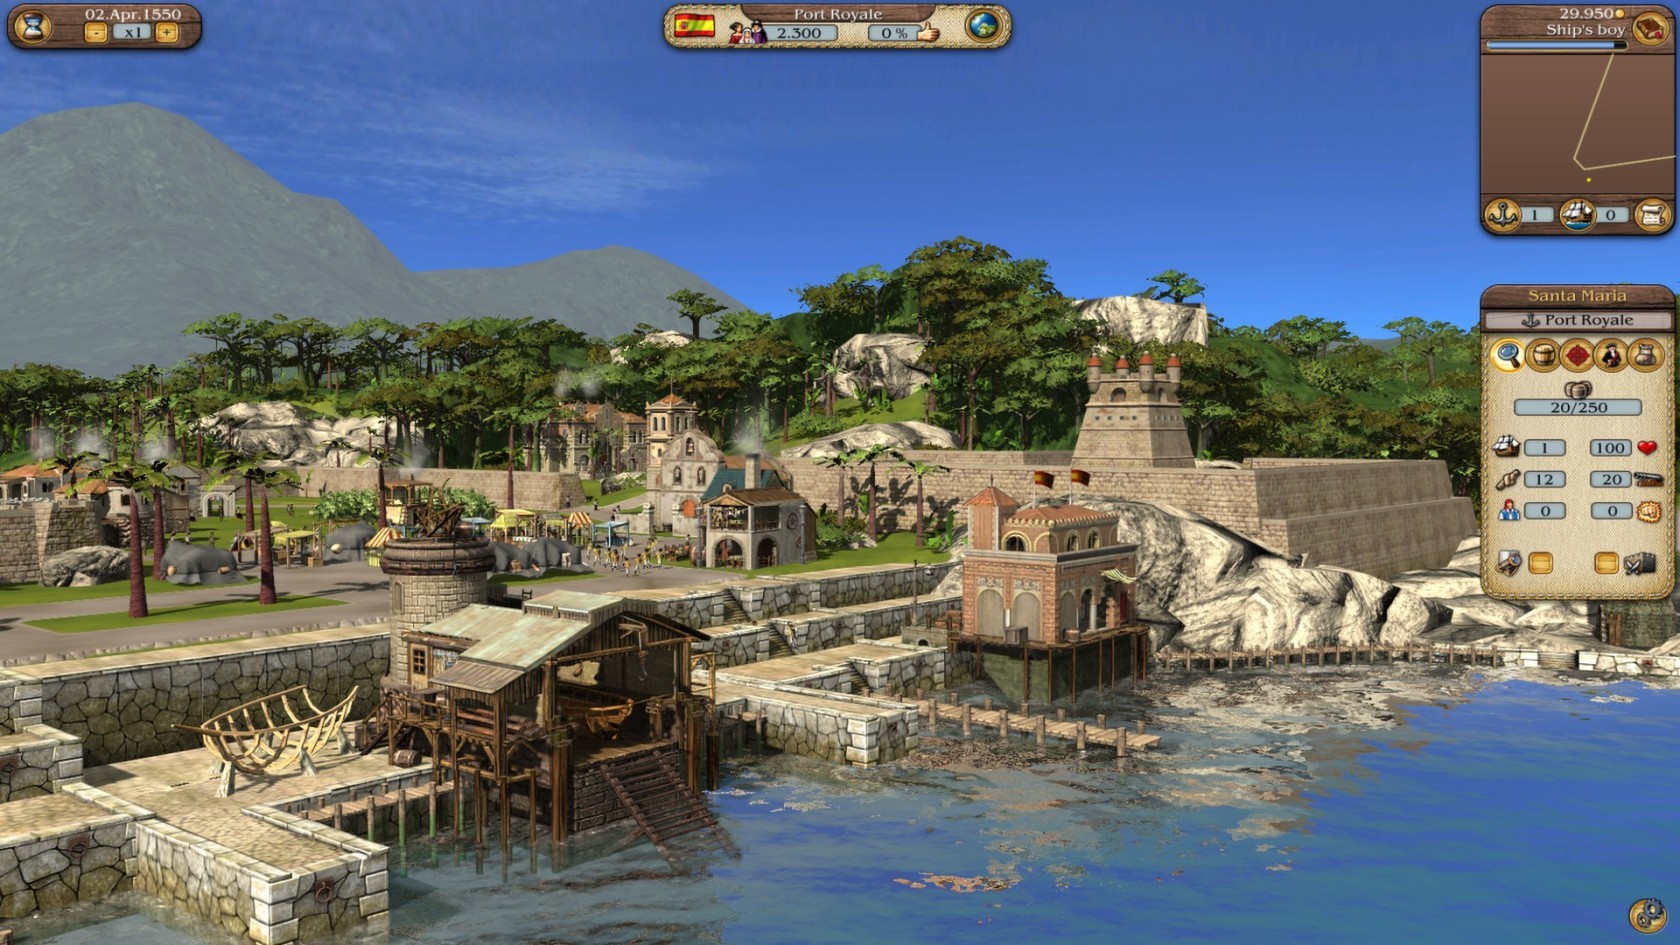 Port royale 2 save game editor